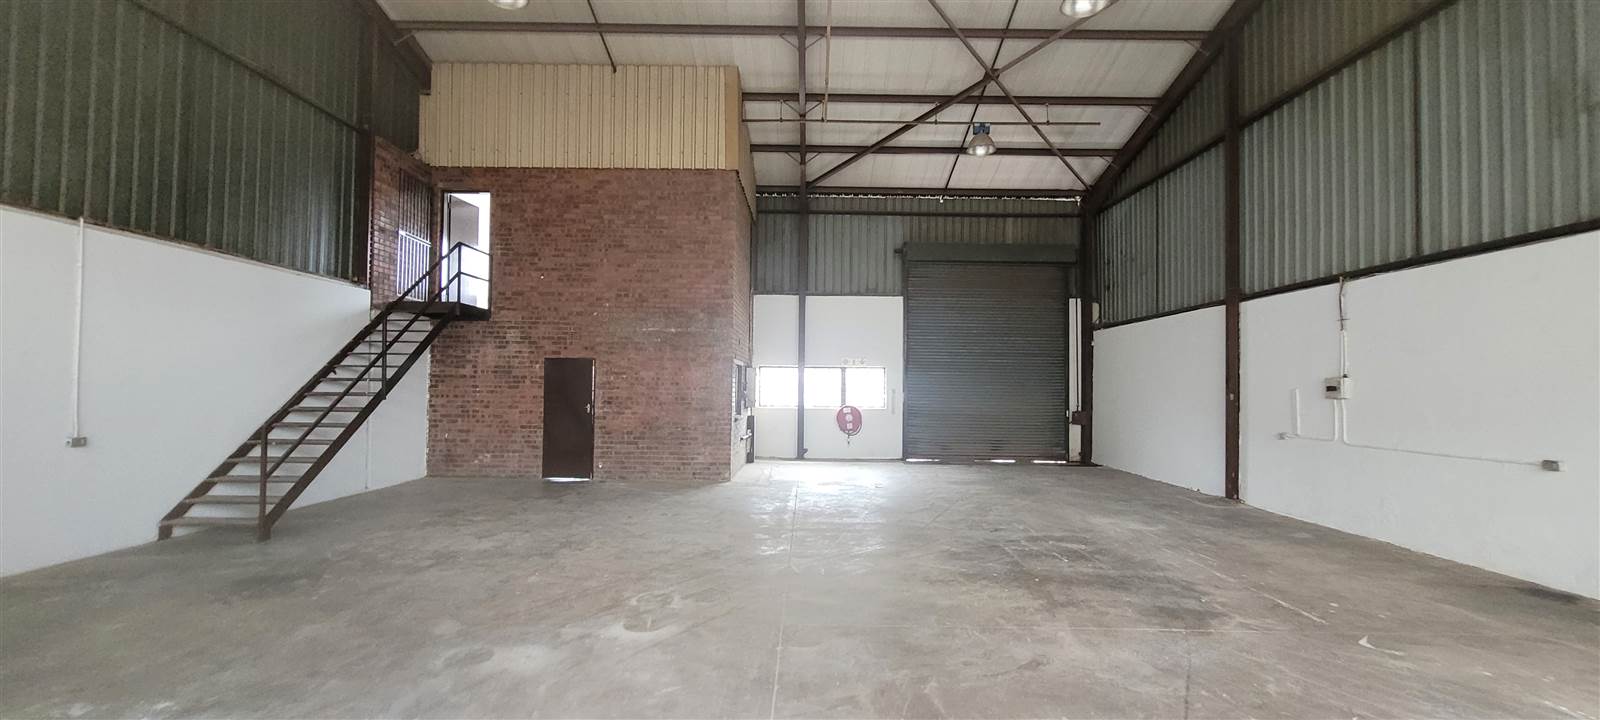 226  m² Industrial space in Robertville photo number 1